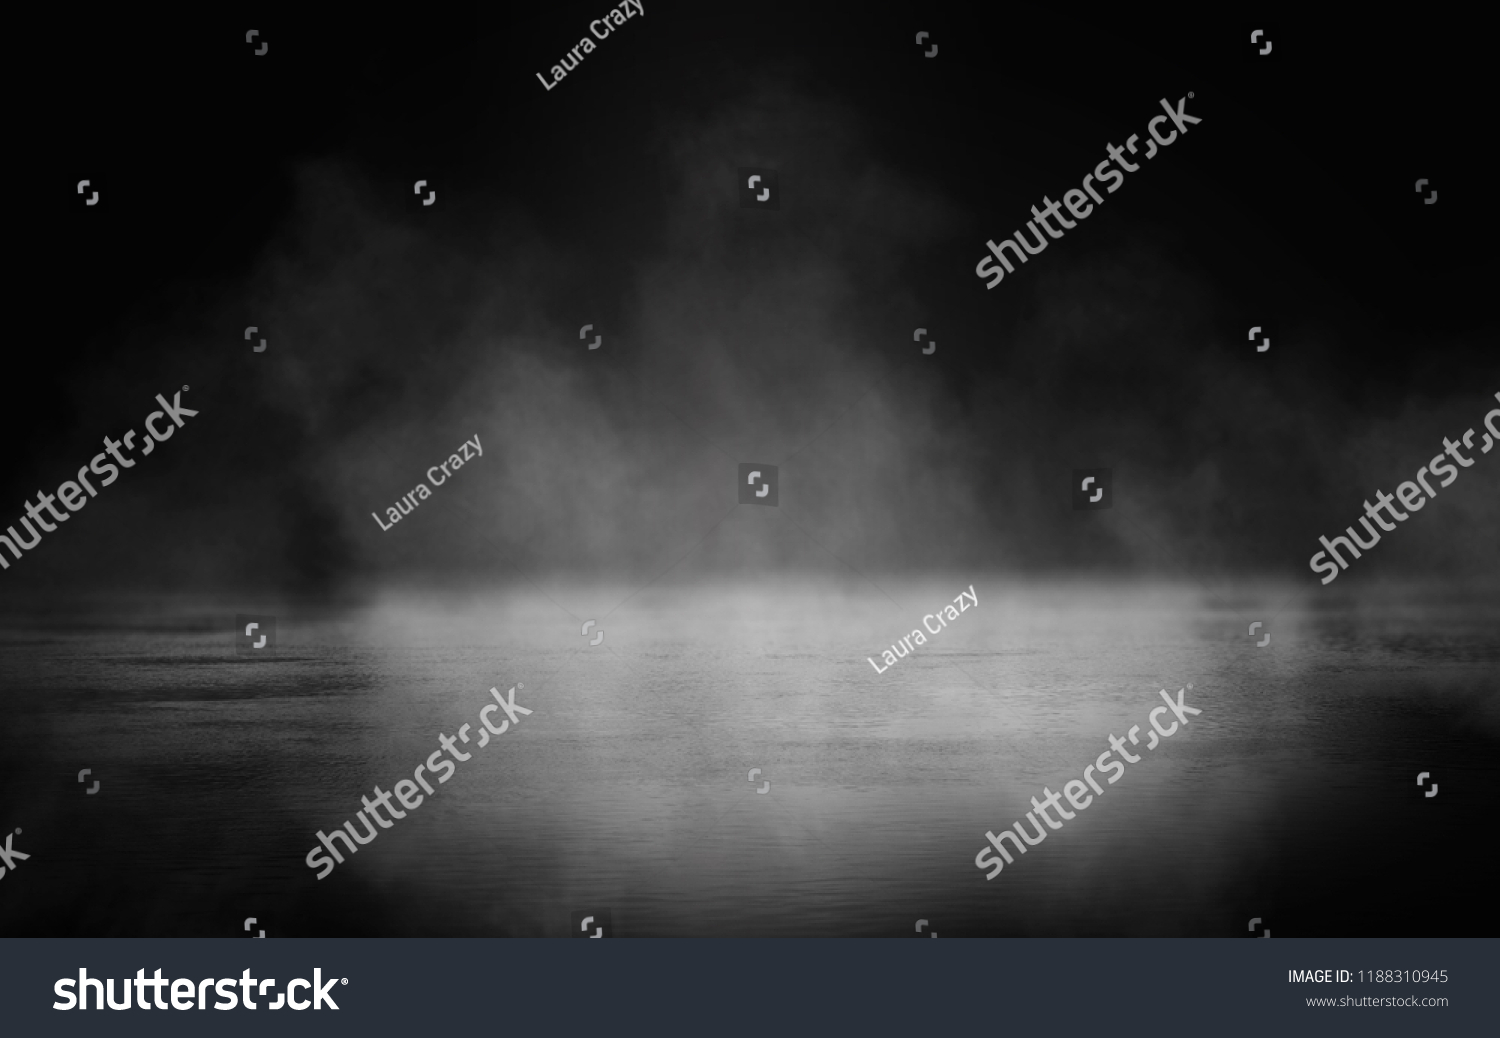 Background of an empty dark room. Empty walls, lights, smoke, glow, rays
 #1188310945